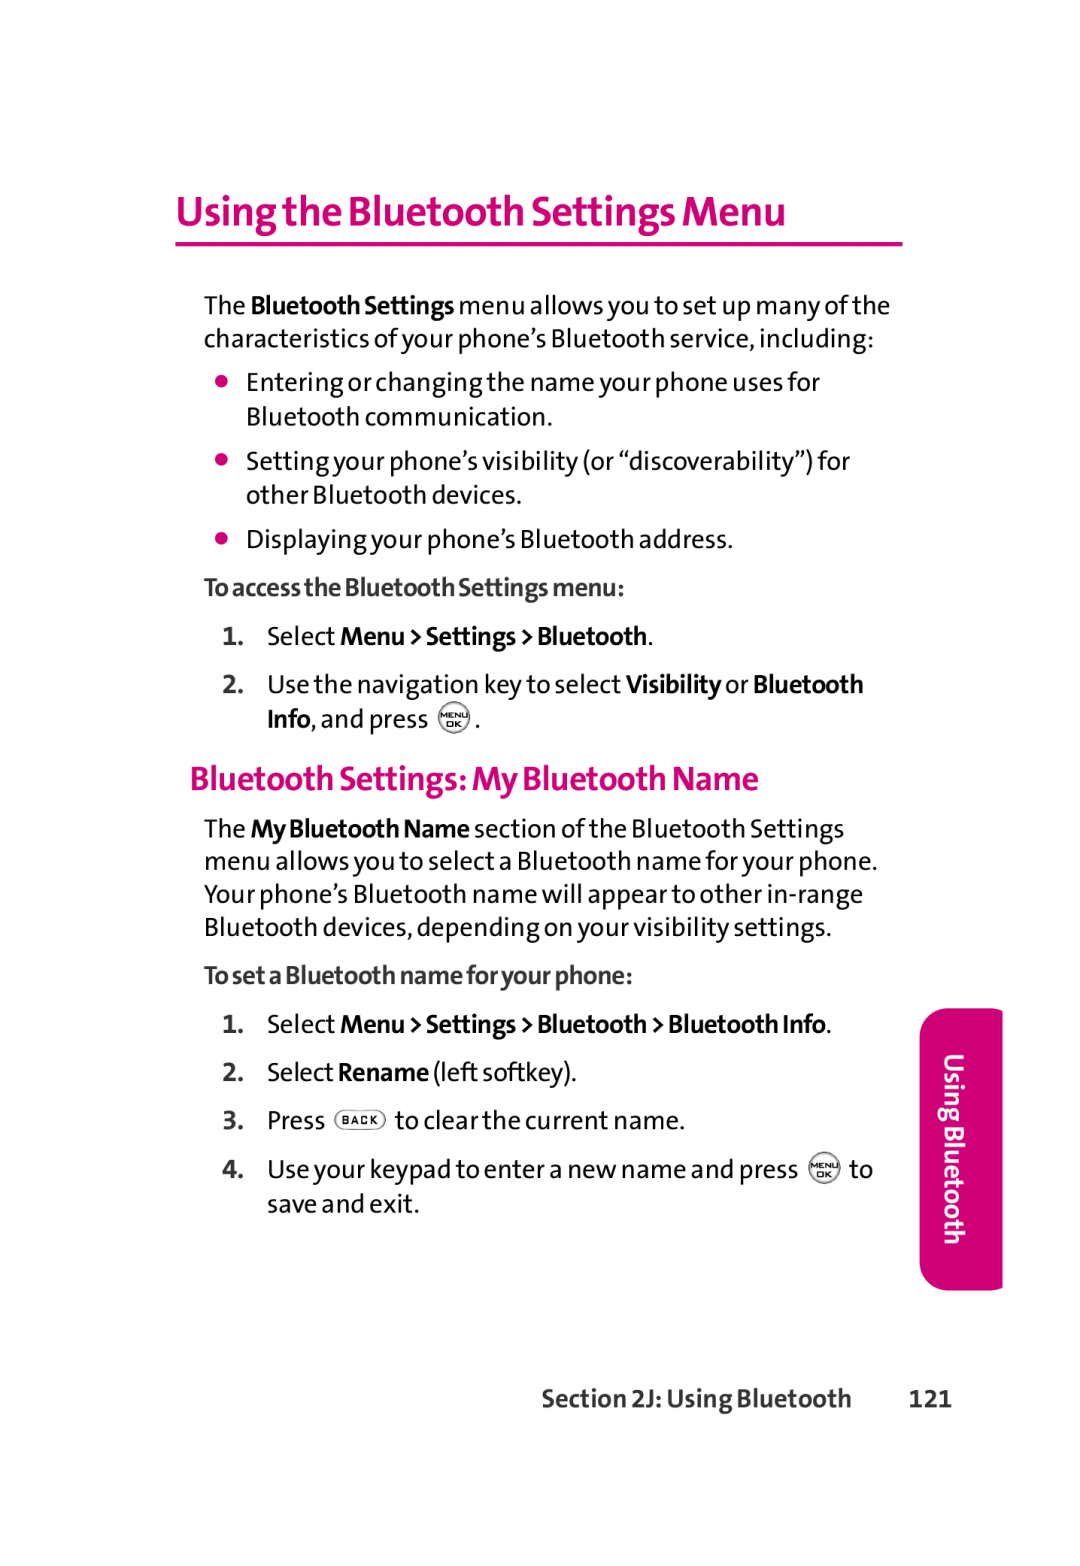 LG Electronics 350 Using the Bluetooth Settings Menu, Bluetooth Settings My Bluetooth Name, Select MenuSettingsBluetooth 